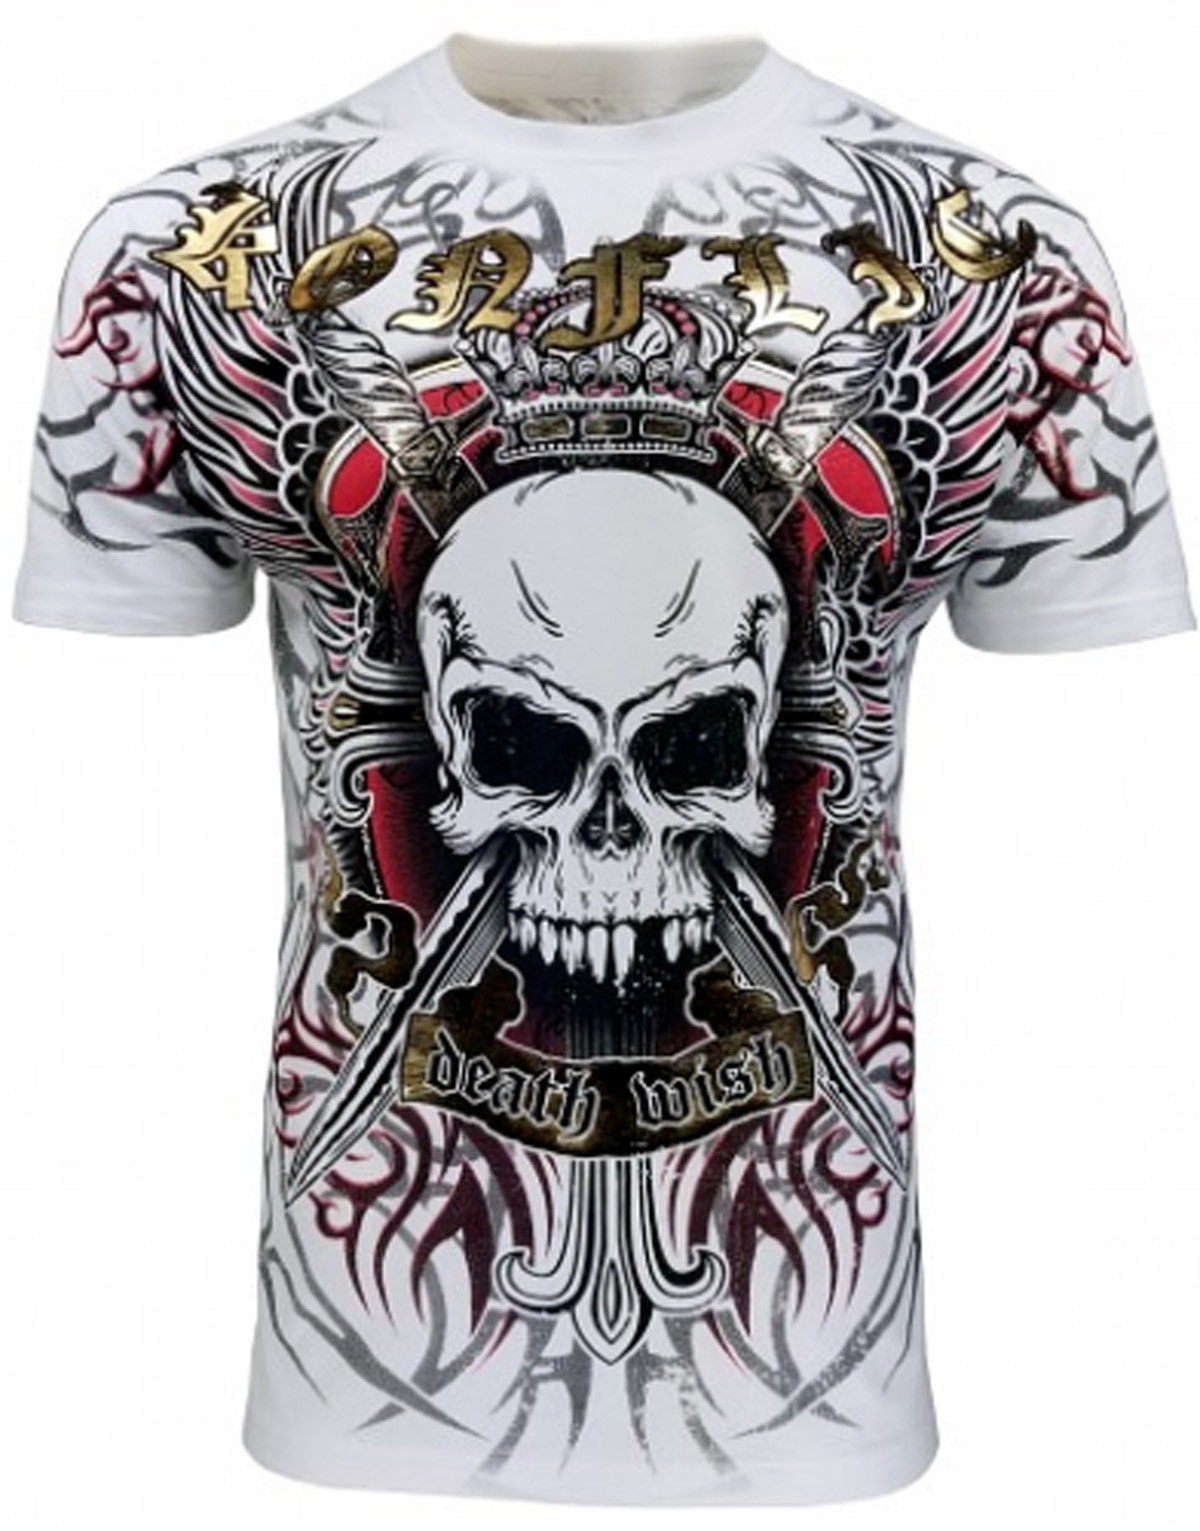 Konflic Clothing - Death Wish T-Shirt